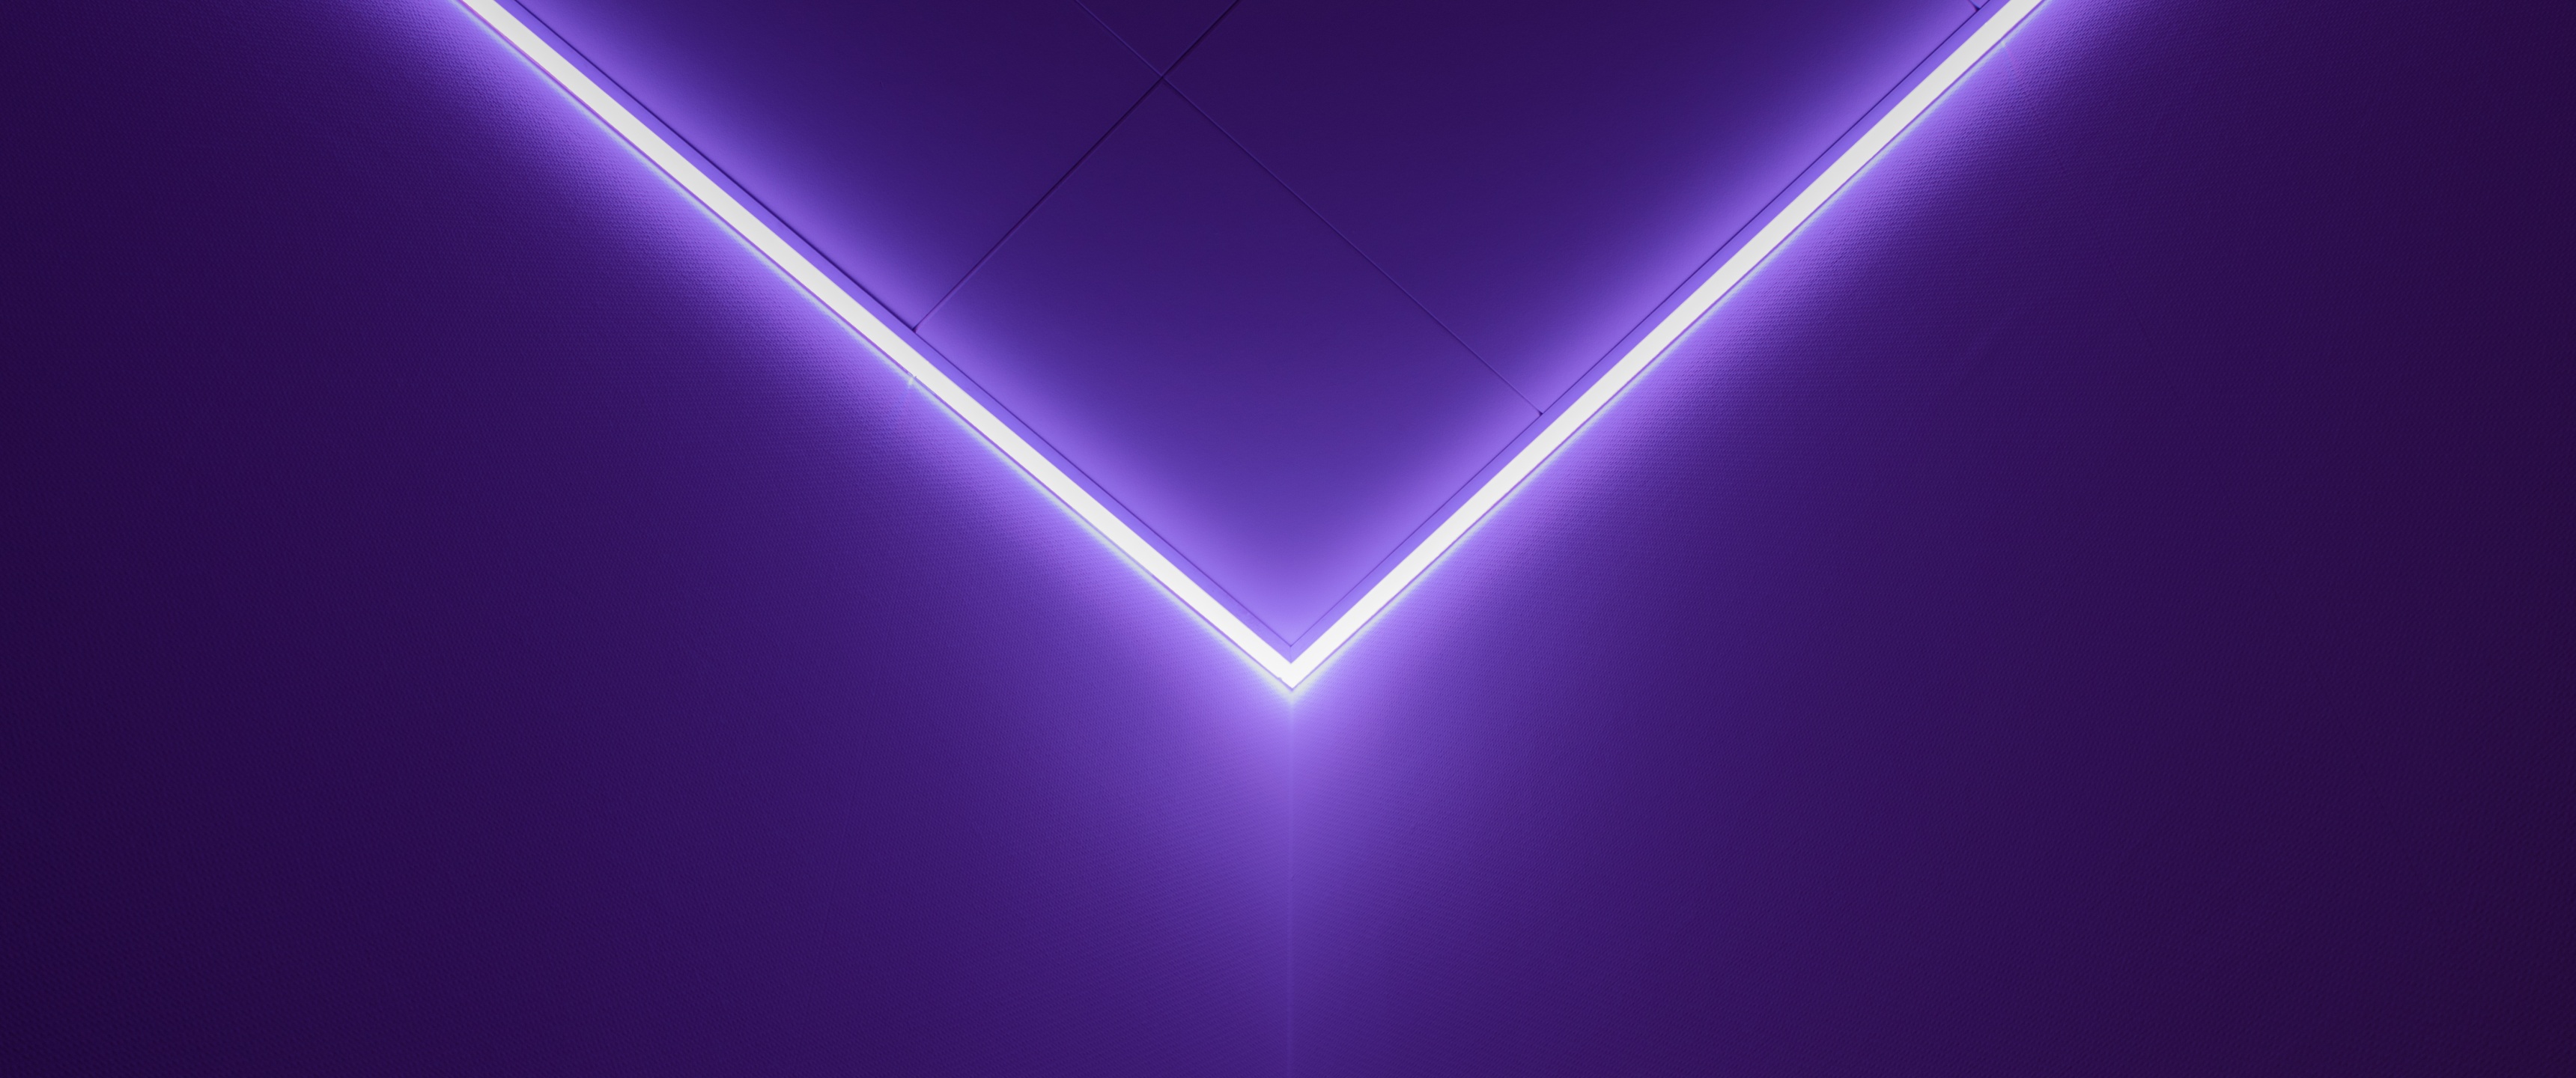 Purple light Wallpaper 4K, Geometric, Abstract